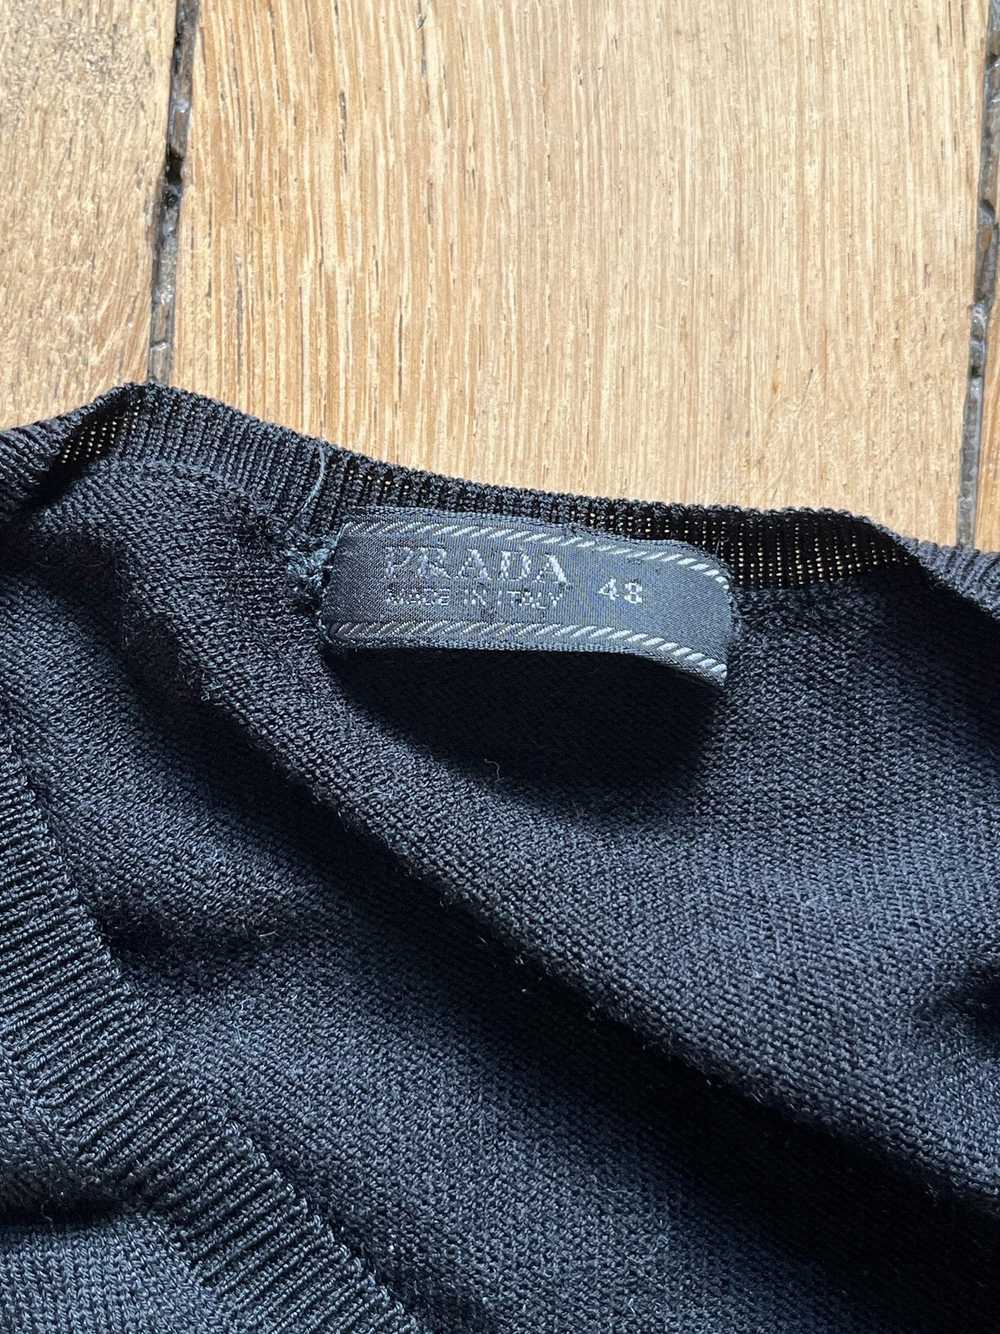 Prada Prada mens black wool knit v neck sweater - image 3